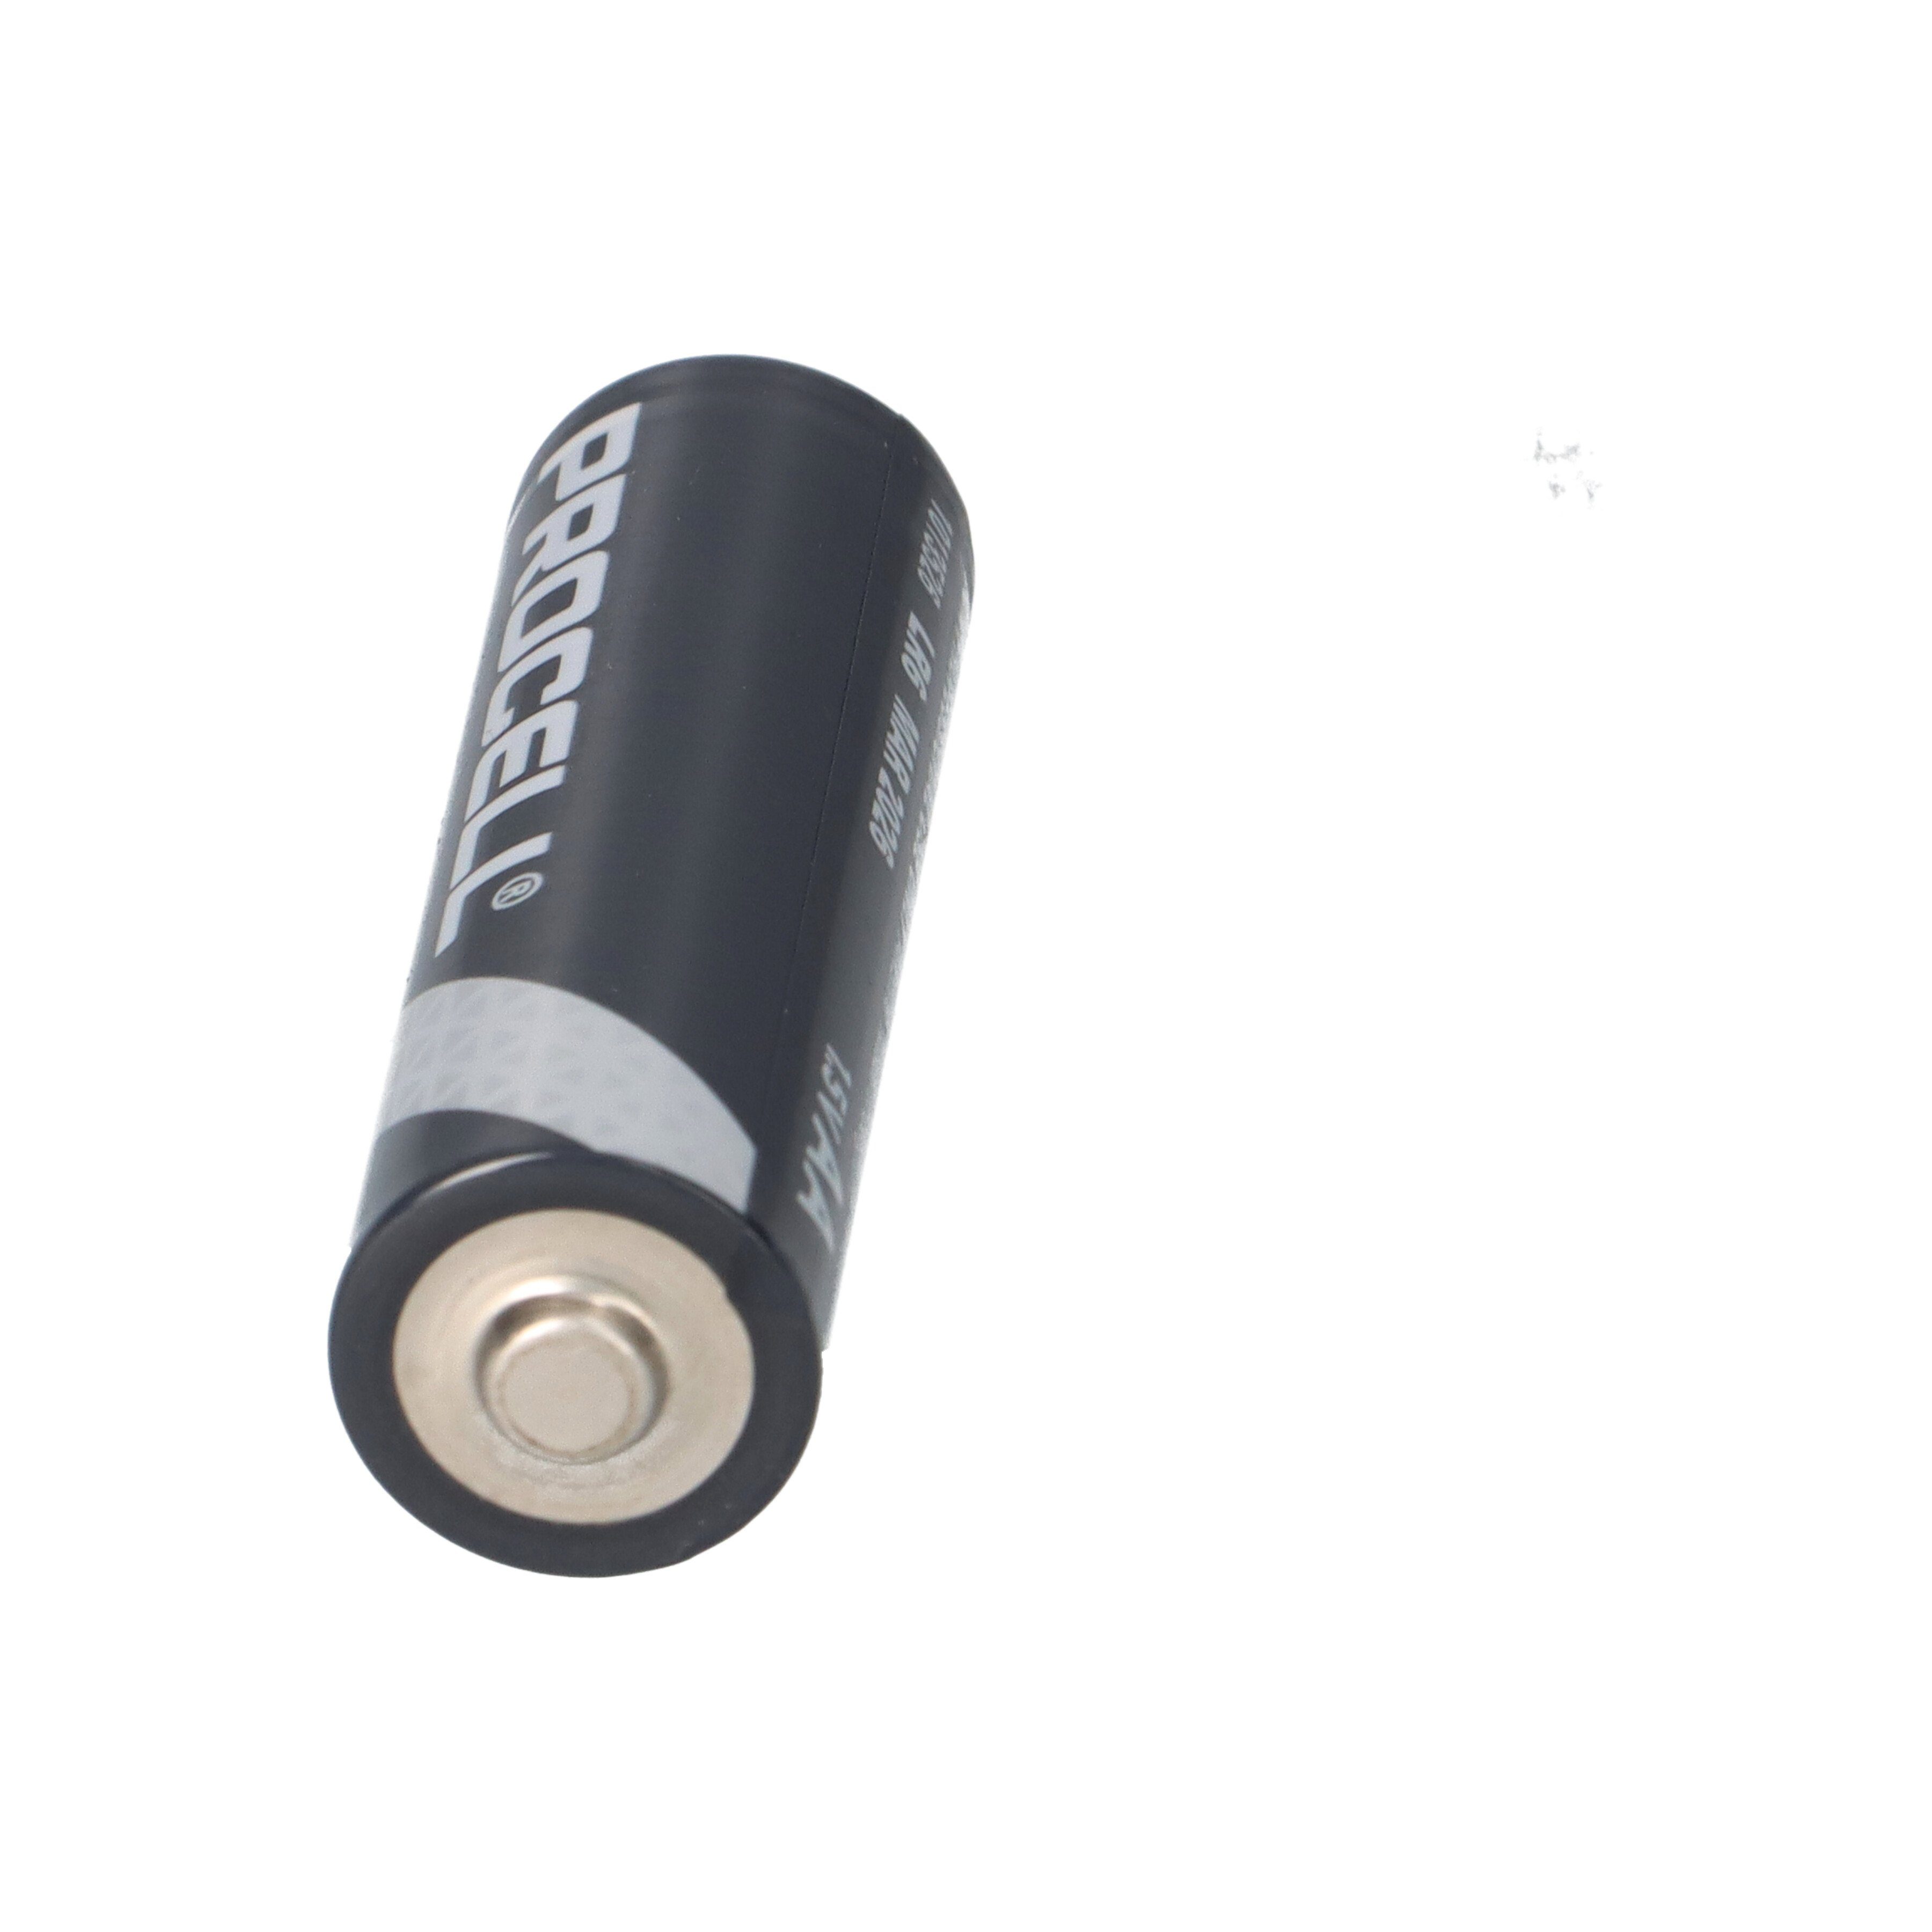 10x Batterie Batterie AA Procell MN1500 Duracell Duracell Mignon LR6